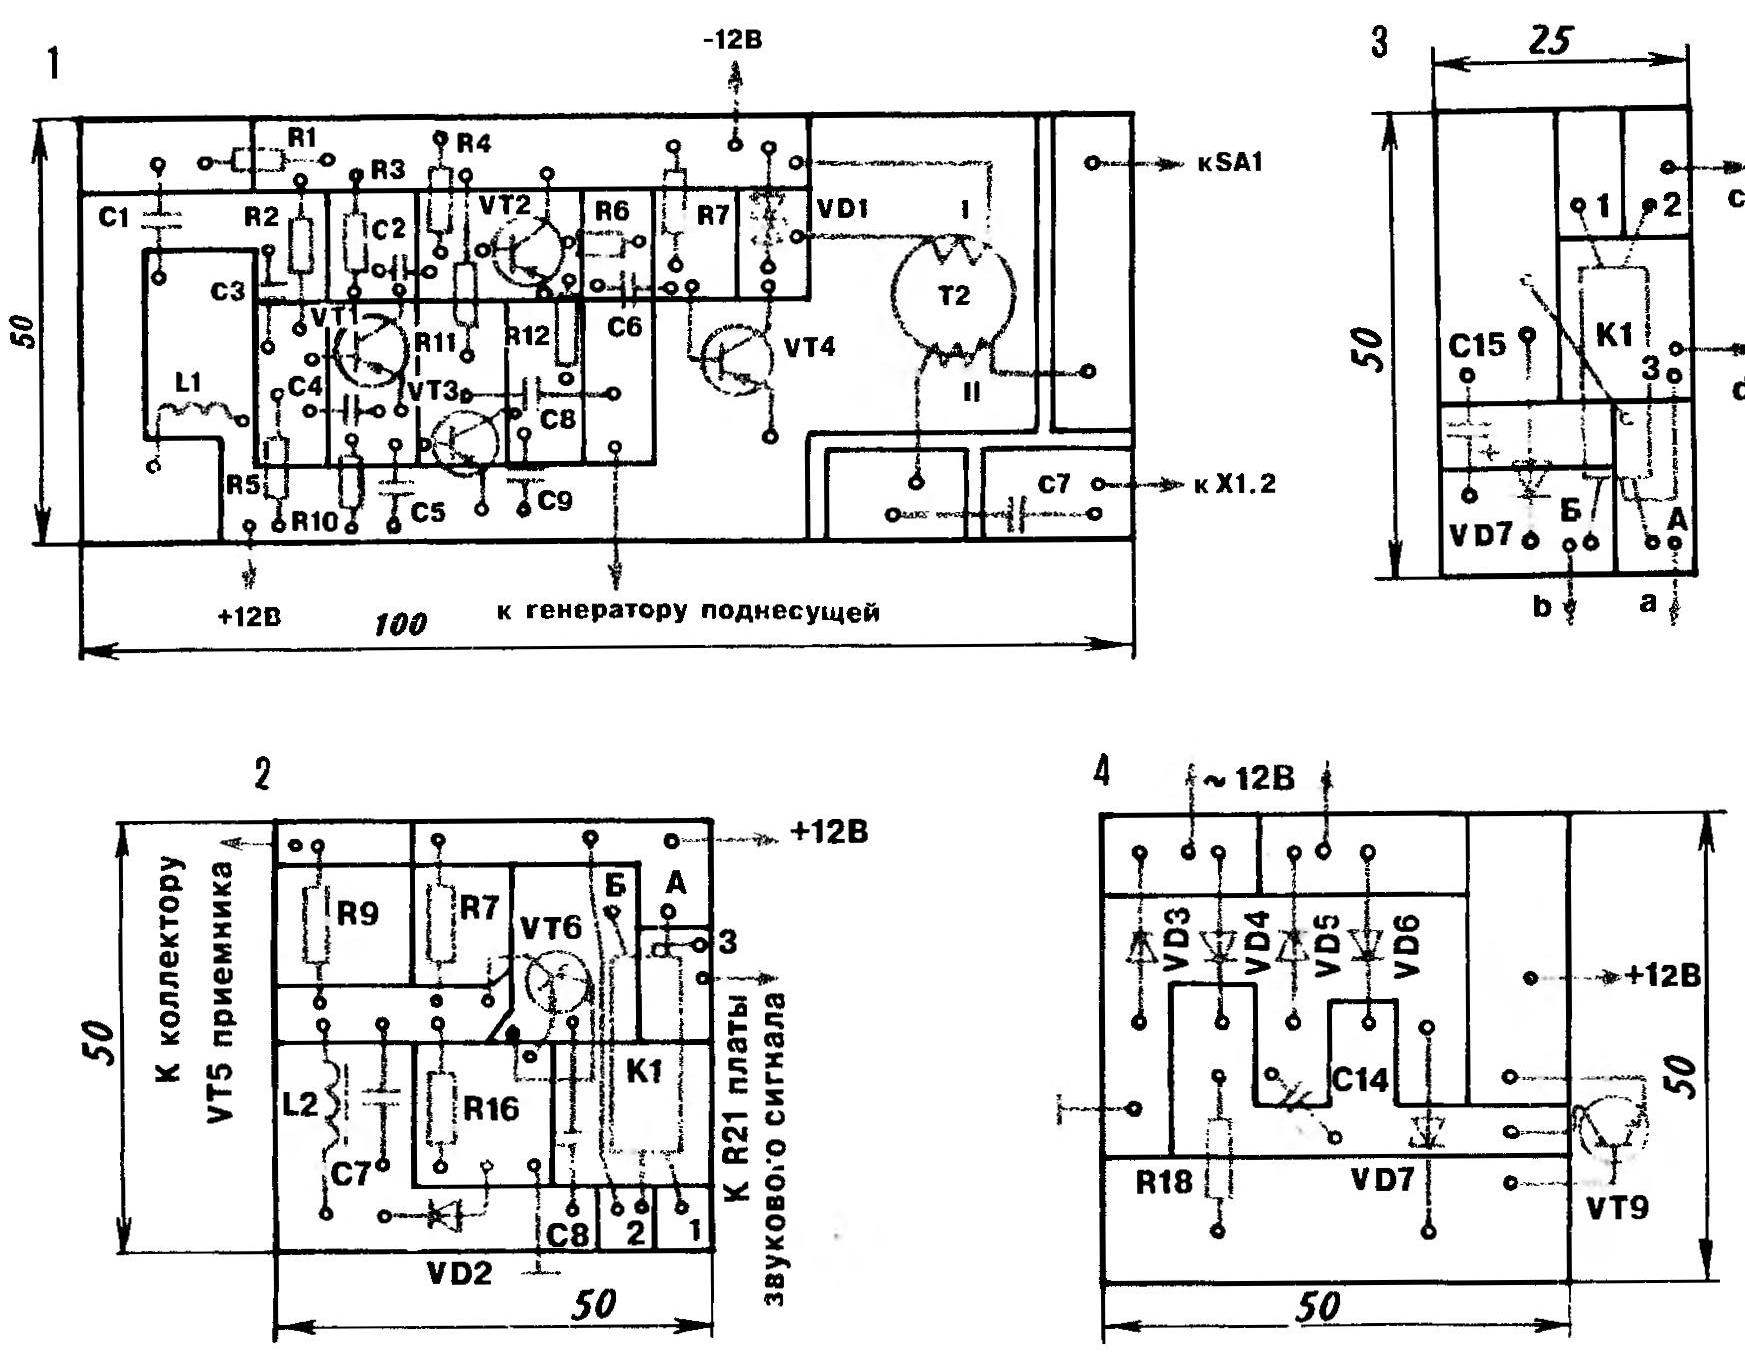 Fig. 2. Circuit Board transmitting device